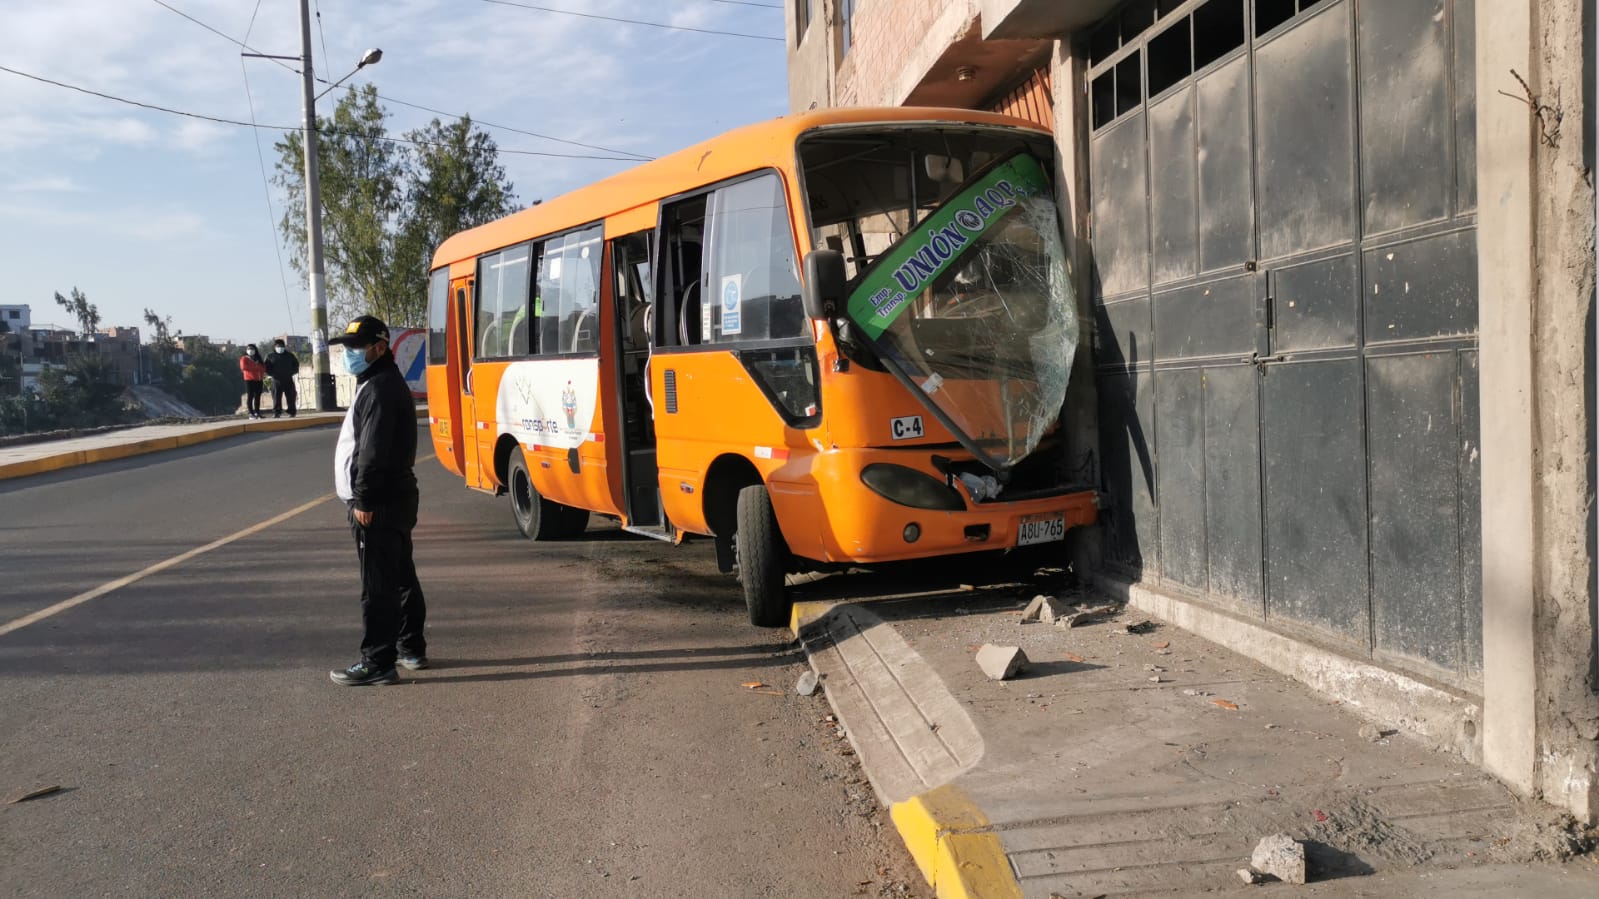 Minibús de transporte urbano se estrella contra vivienda y deja 6 heridos en ASA